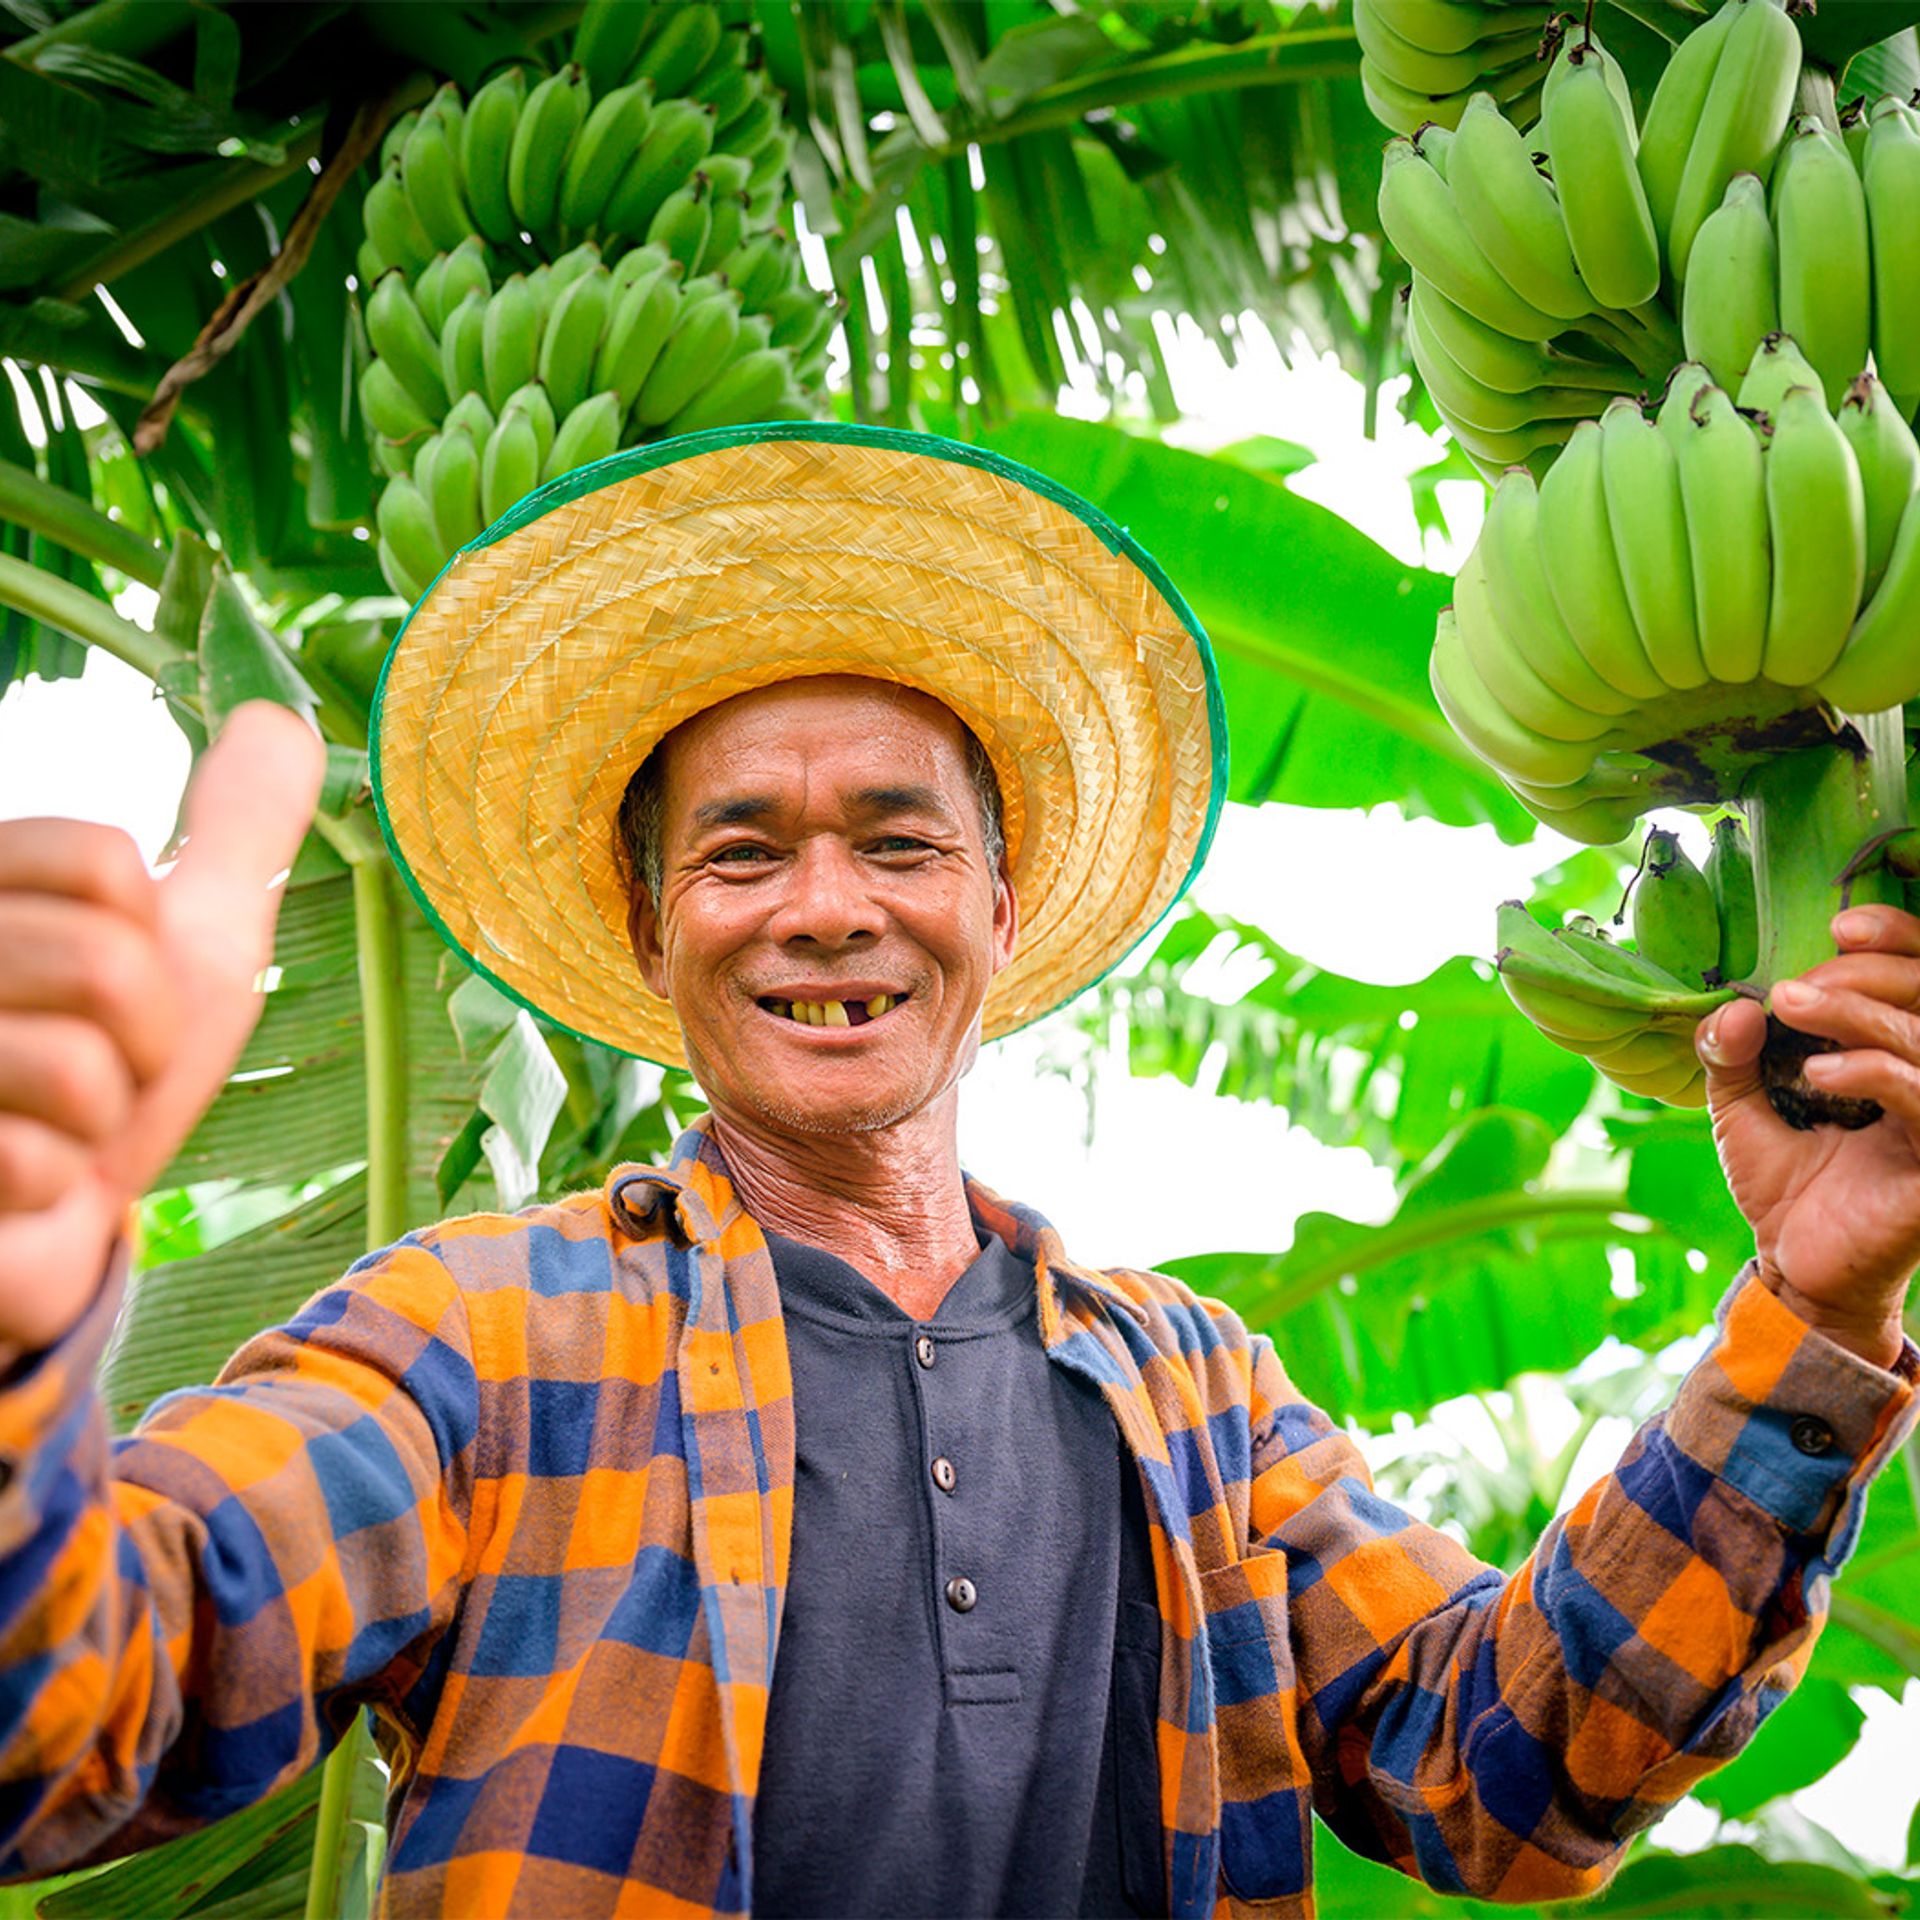 Image of a banana producer displaying produce